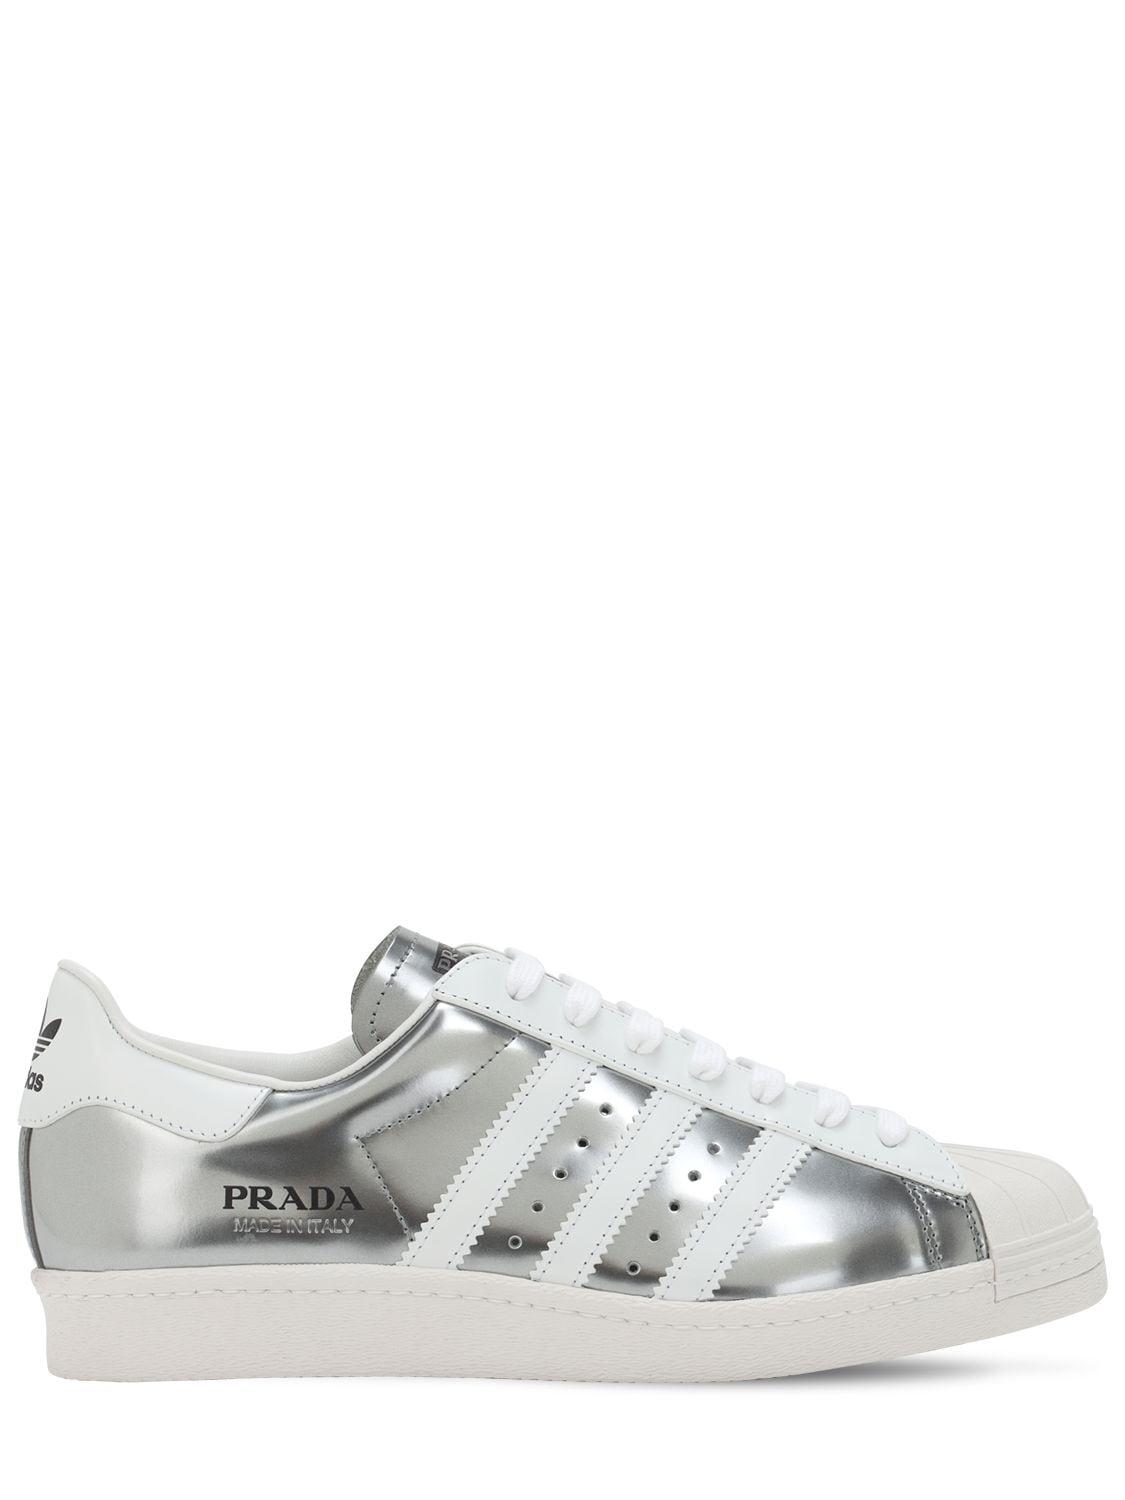 Adidas X Prada Prada Superstar Leather Sneakers In Silver Metallic